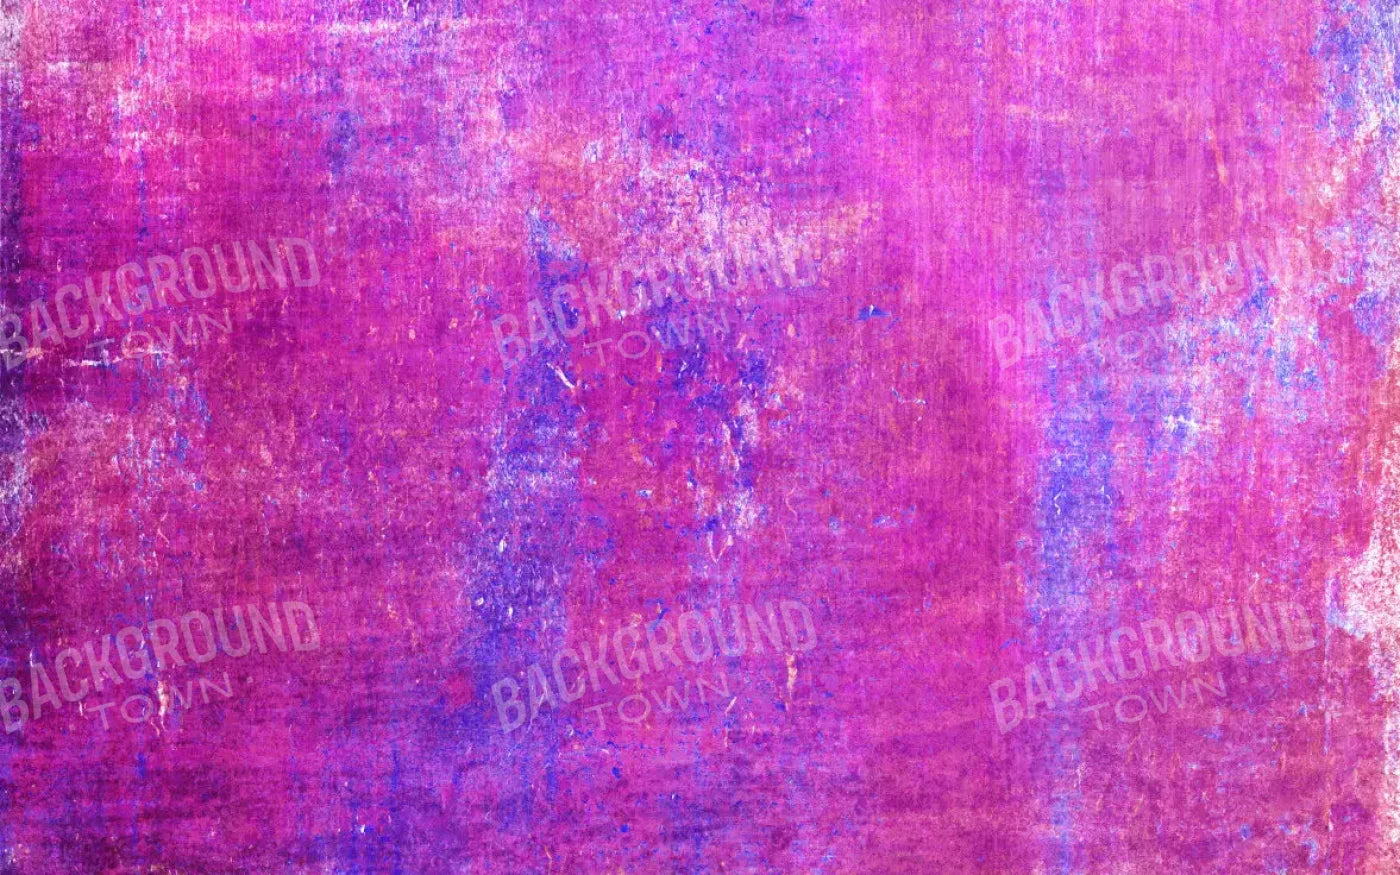 Becca 14X9 Ultracloth ( 168 X 108 Inch ) Backdrop